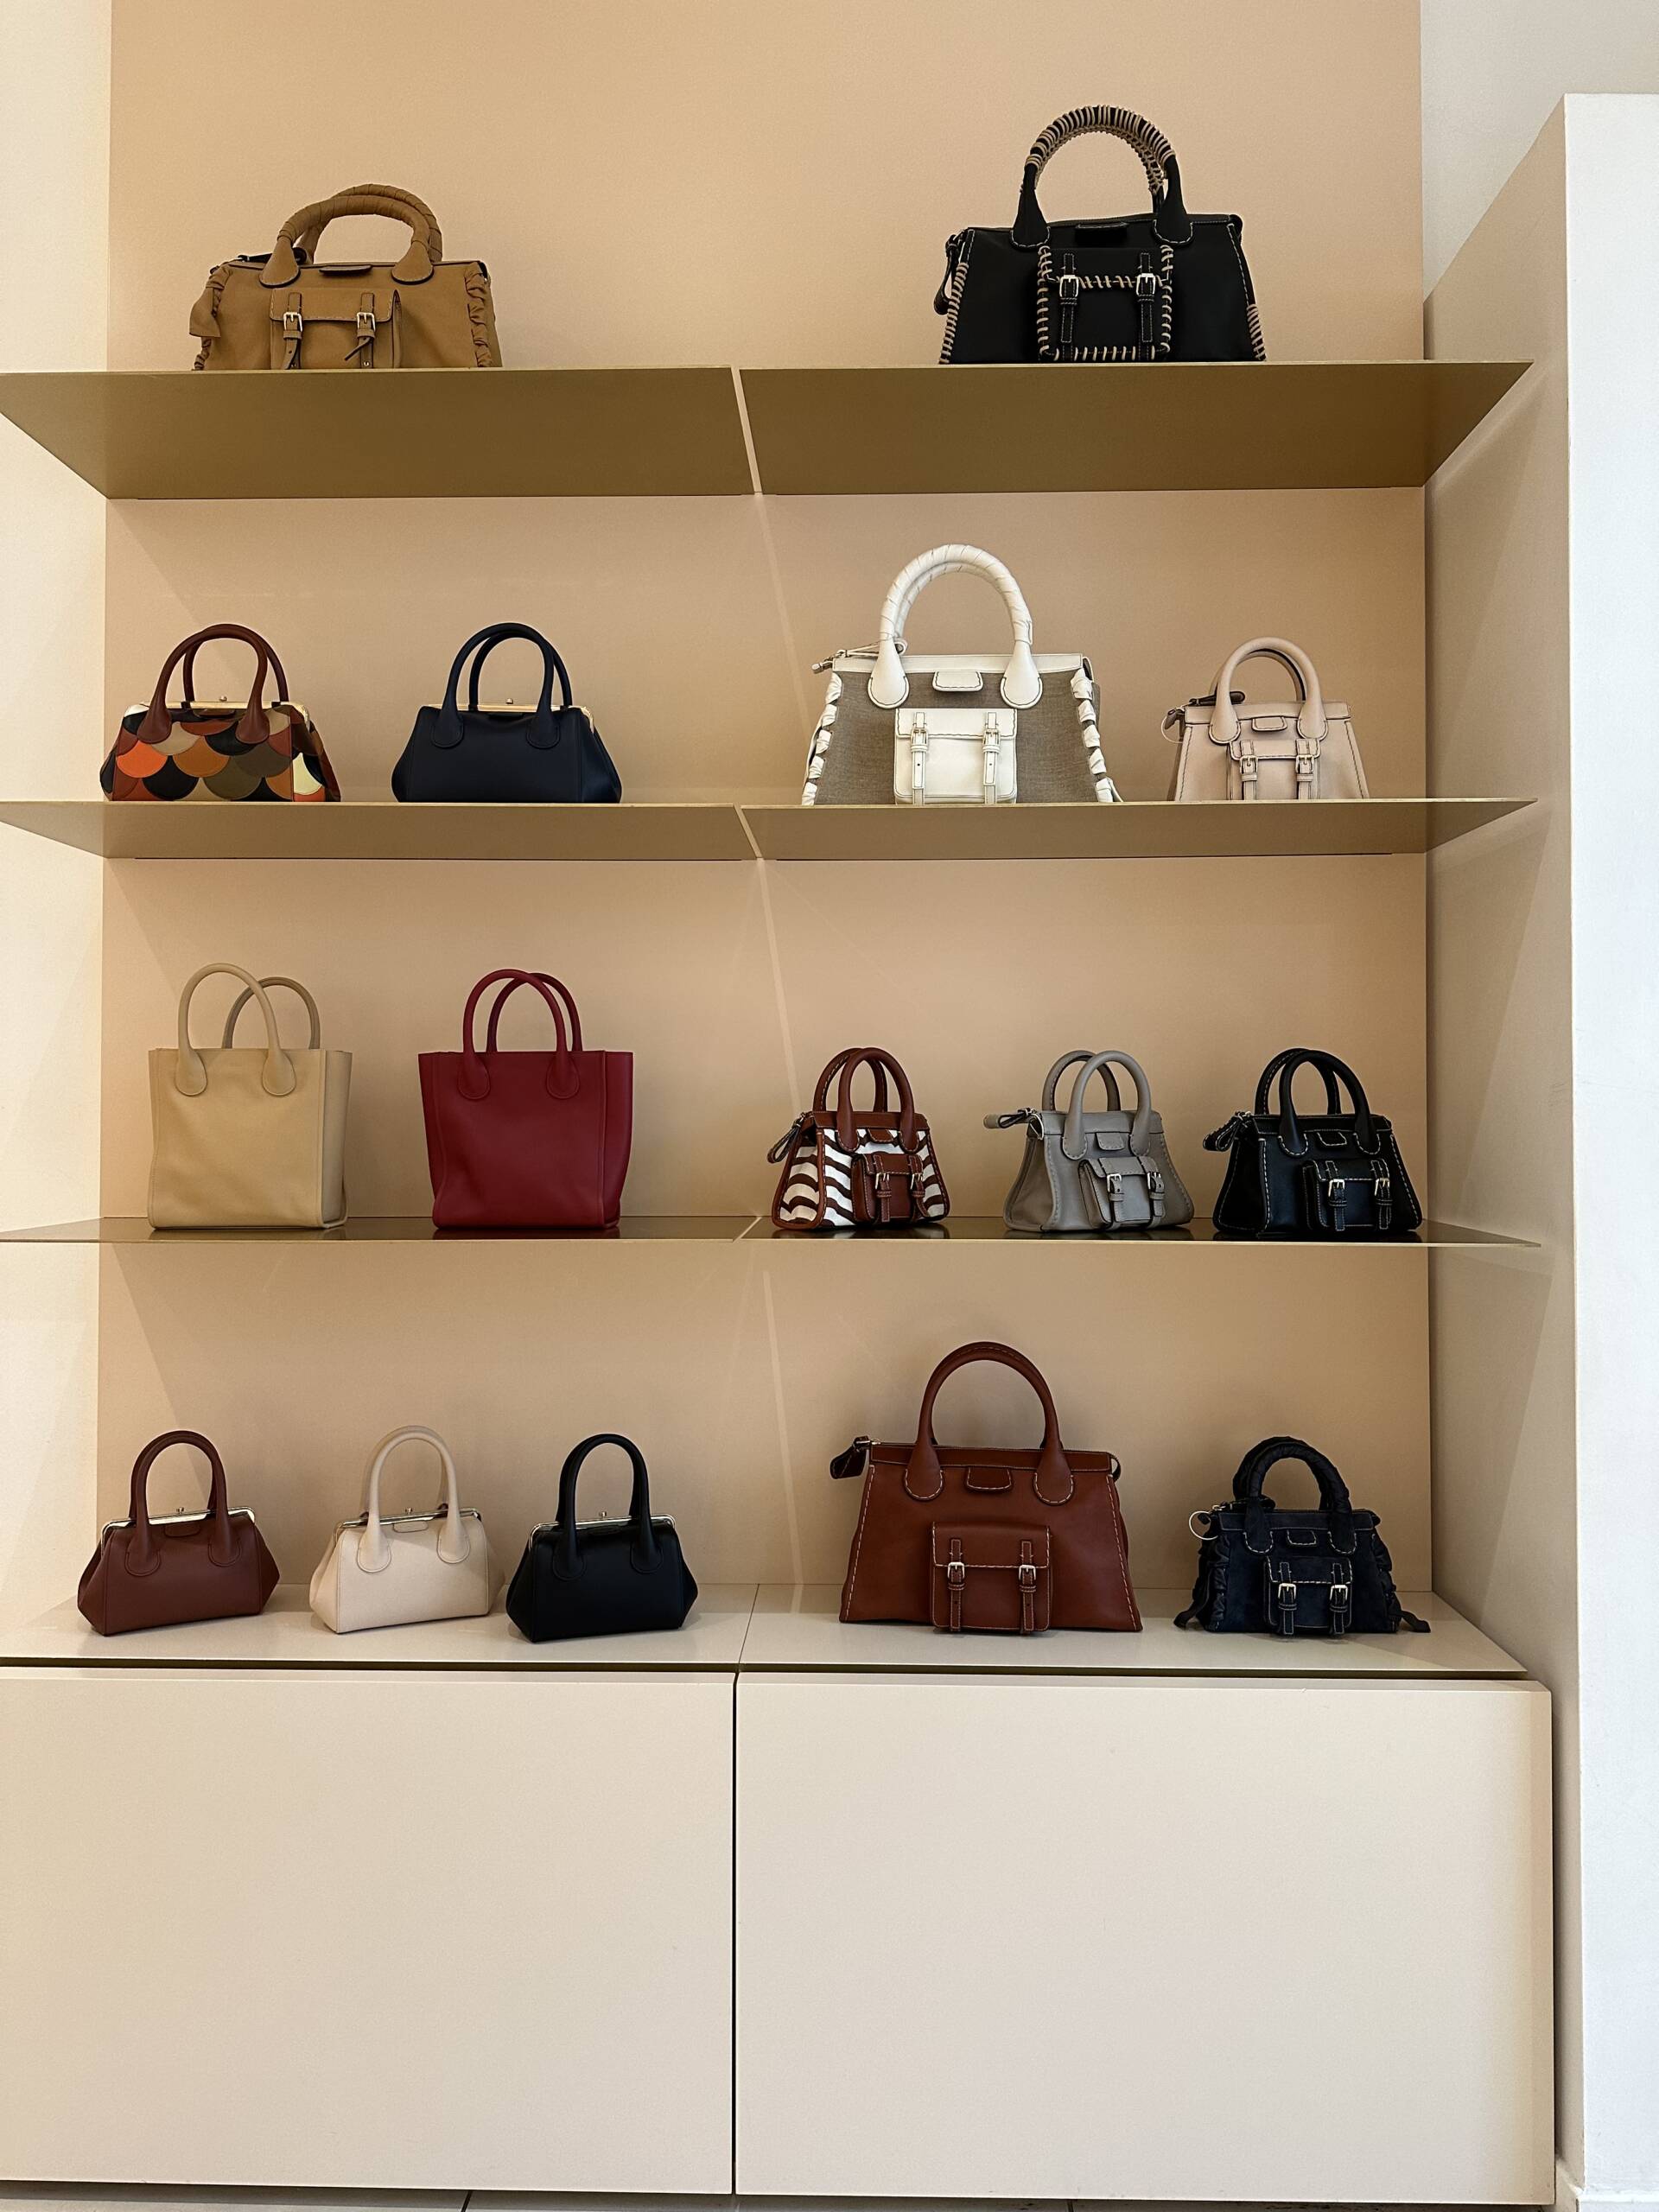 Shopping for Chloe handbags on display at La Vallee Village in Paris.